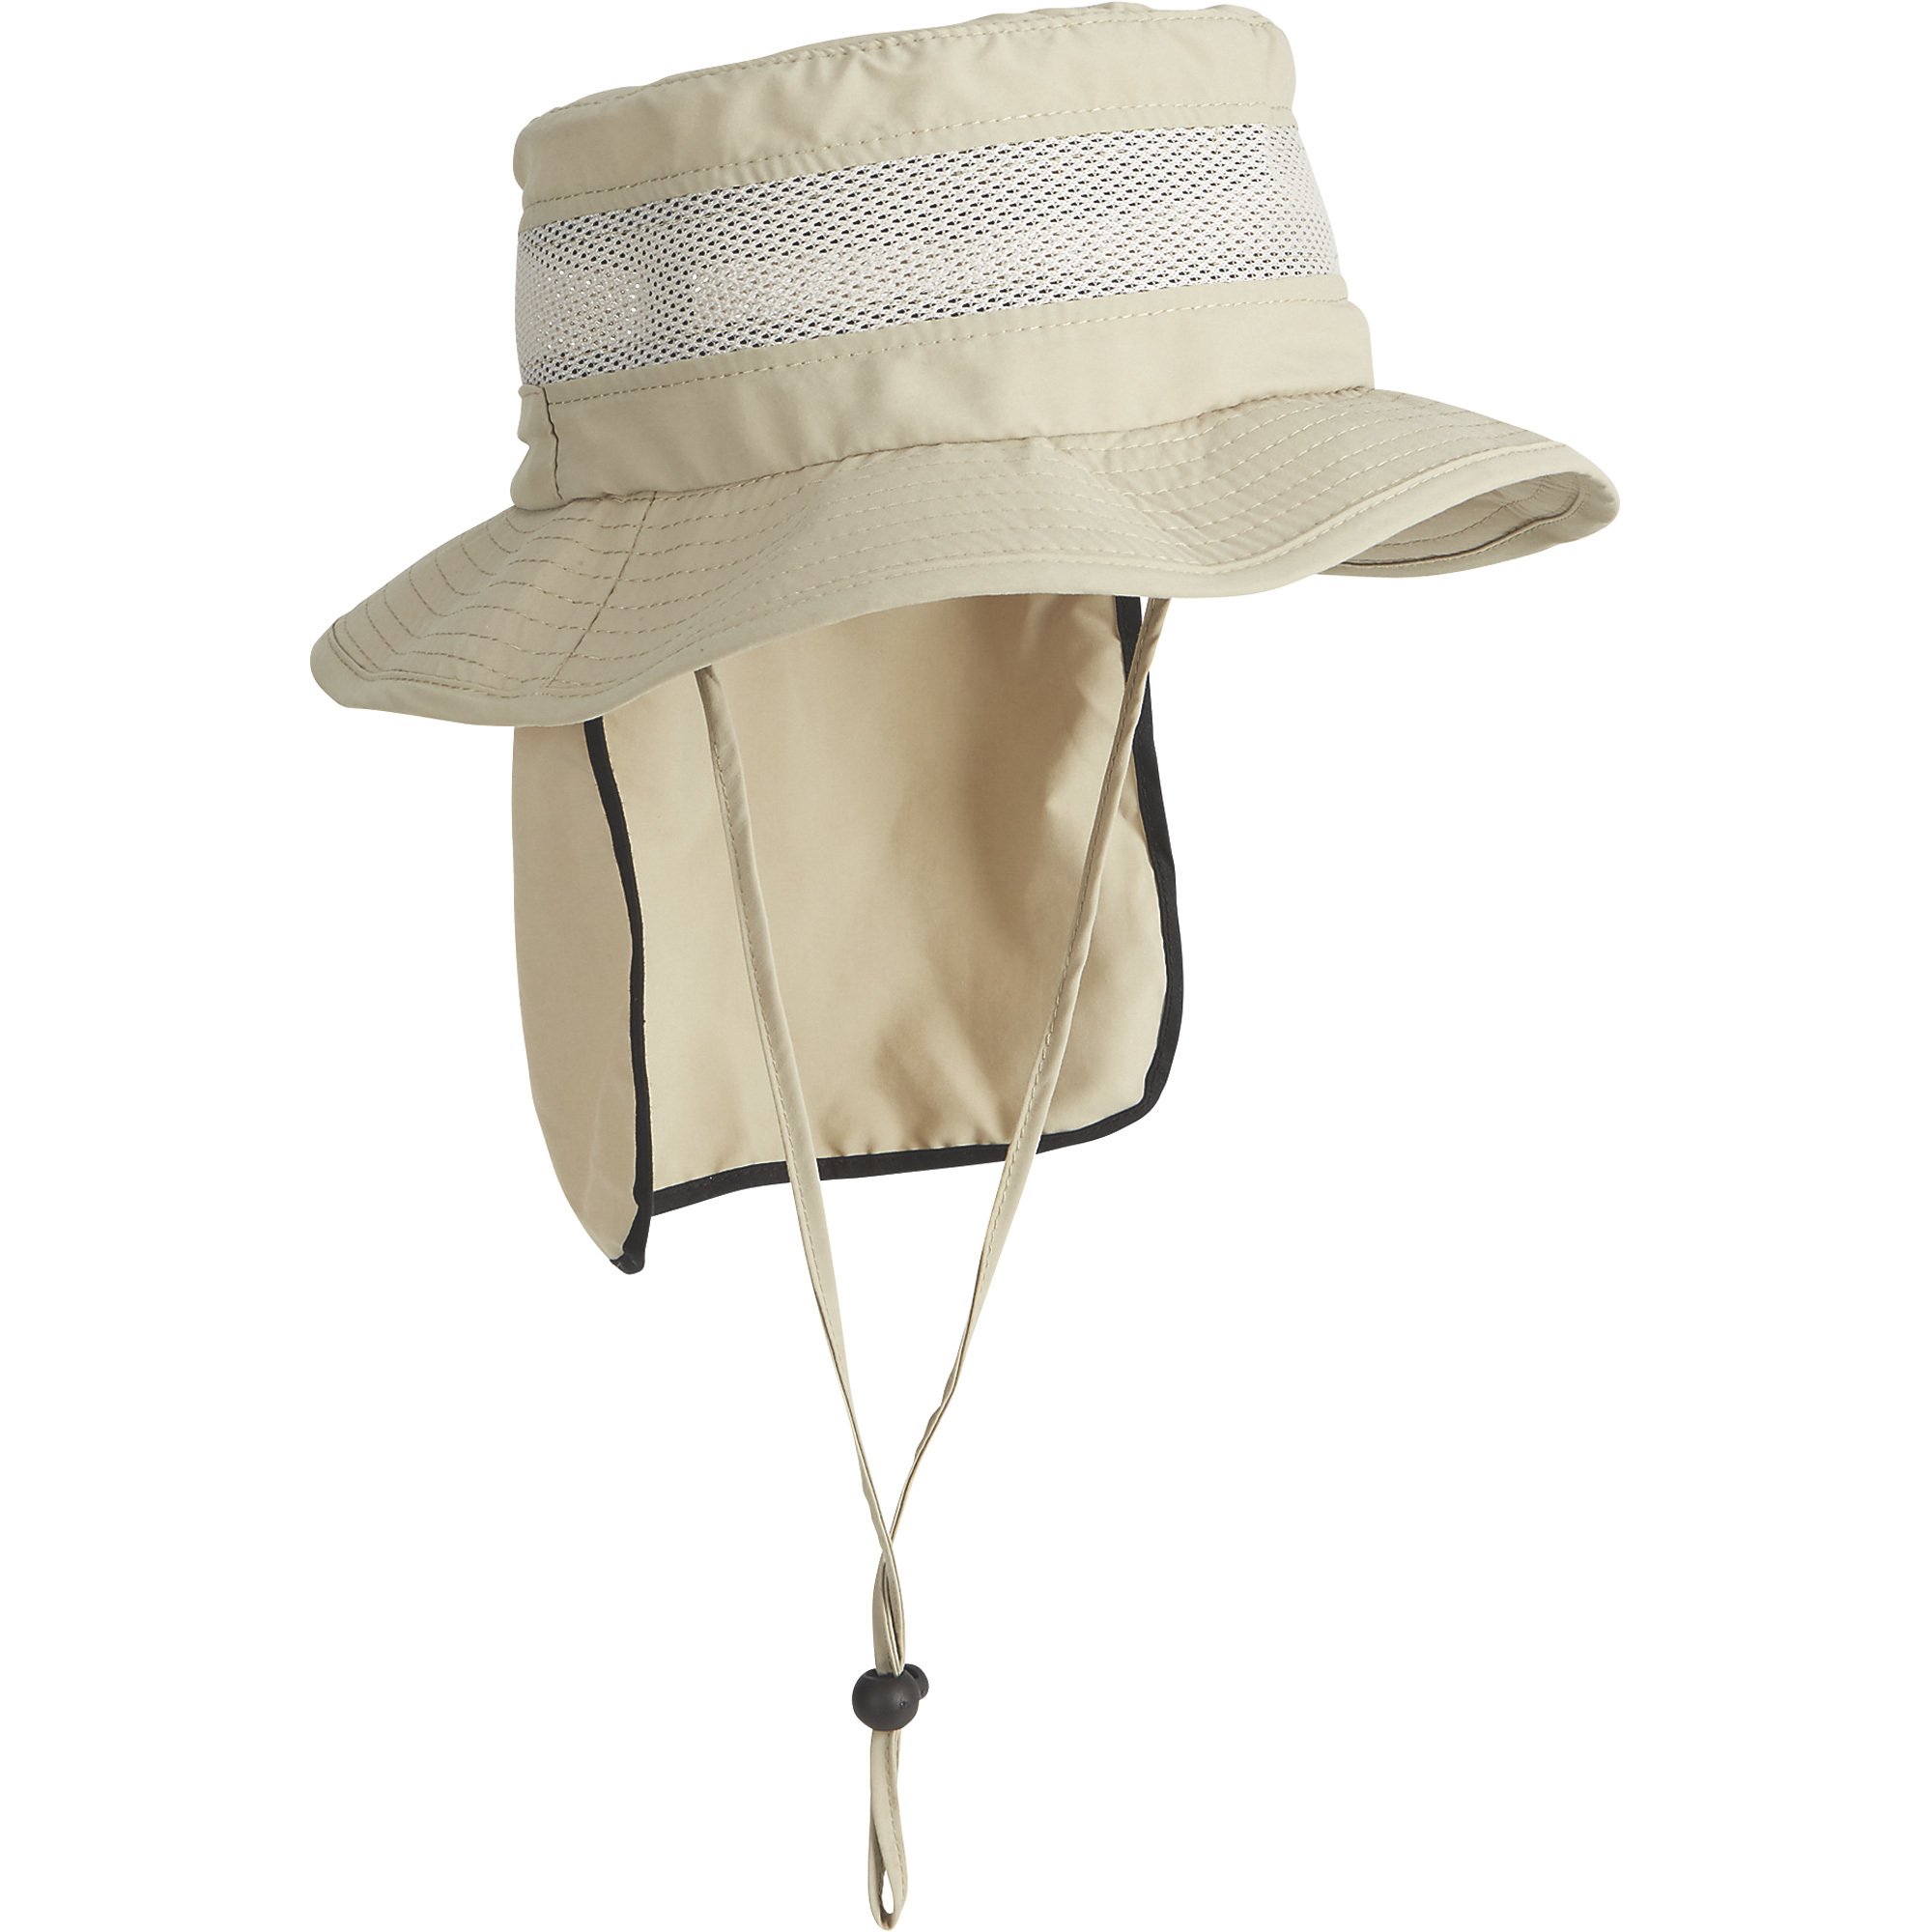 Stetson Men's Boonie Hat with Neck Flap — Khaki